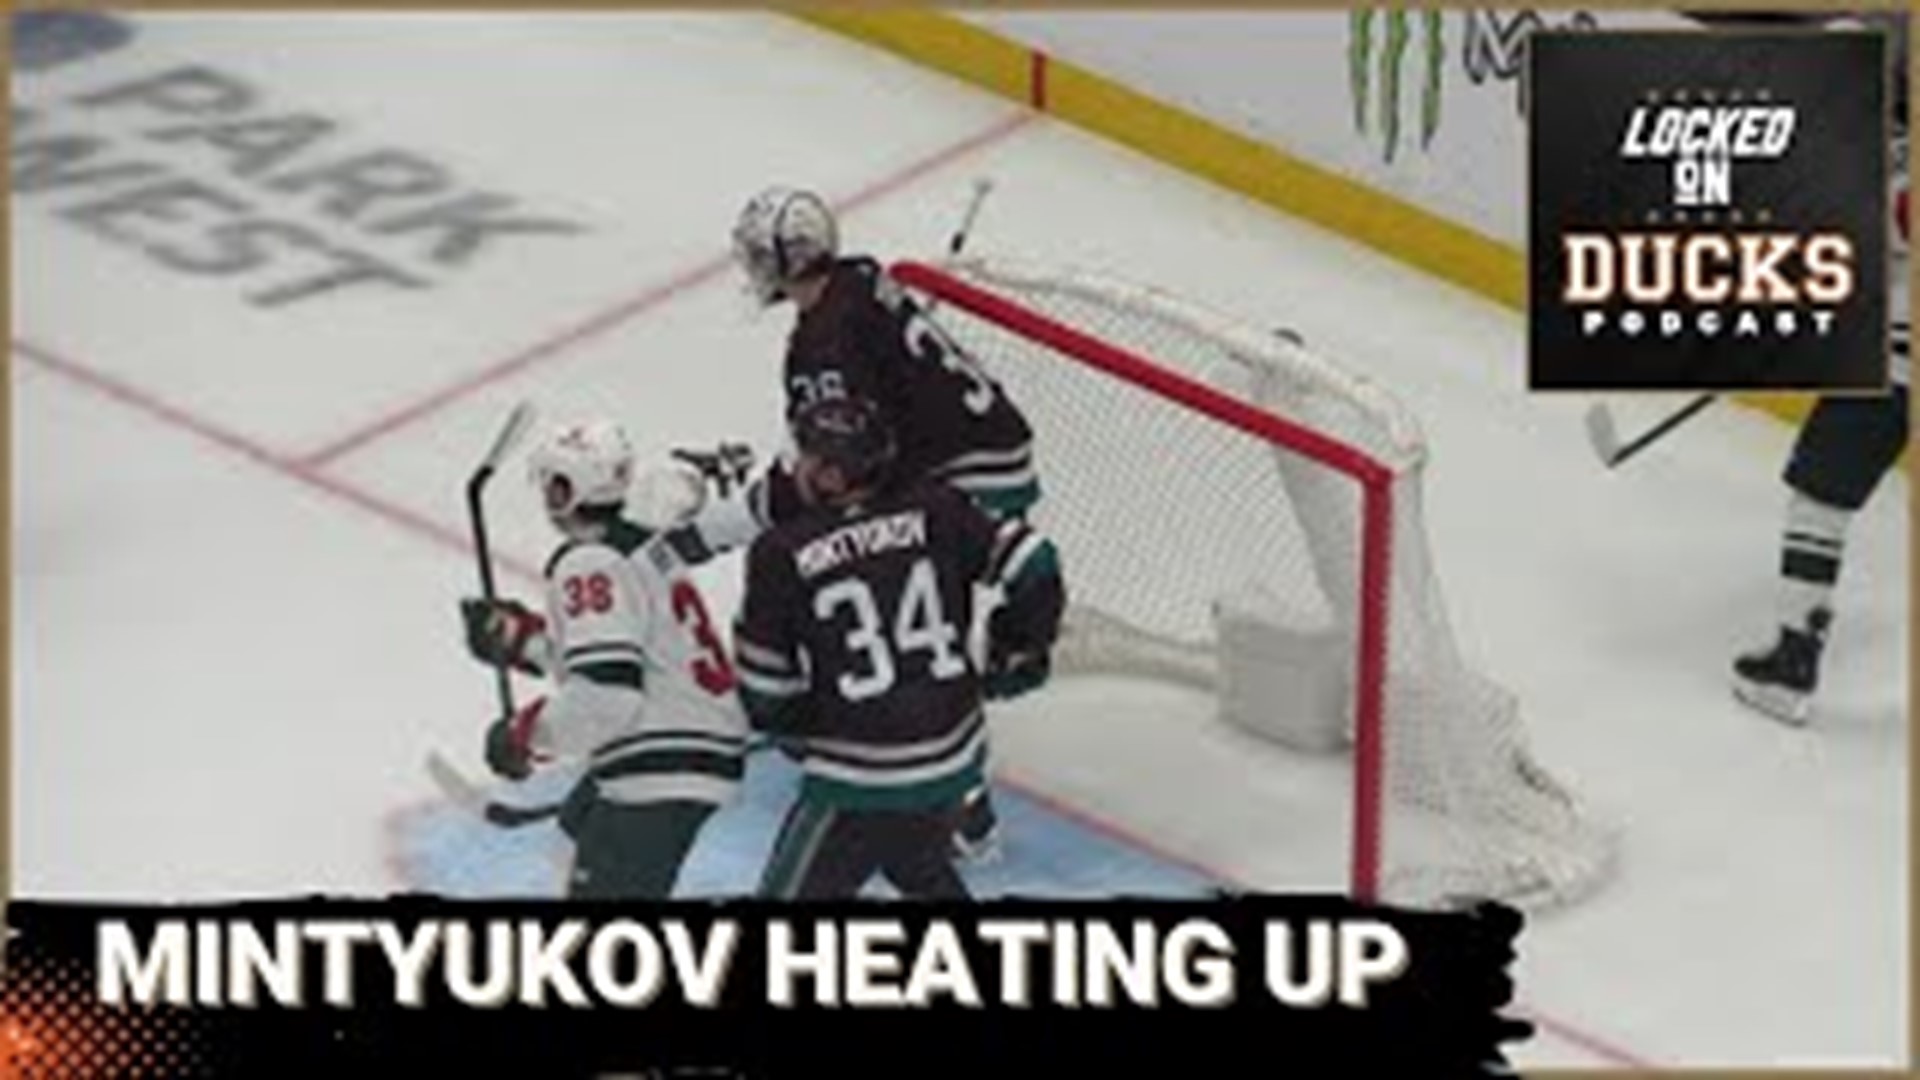 Pavel Mintyukov Heating Up